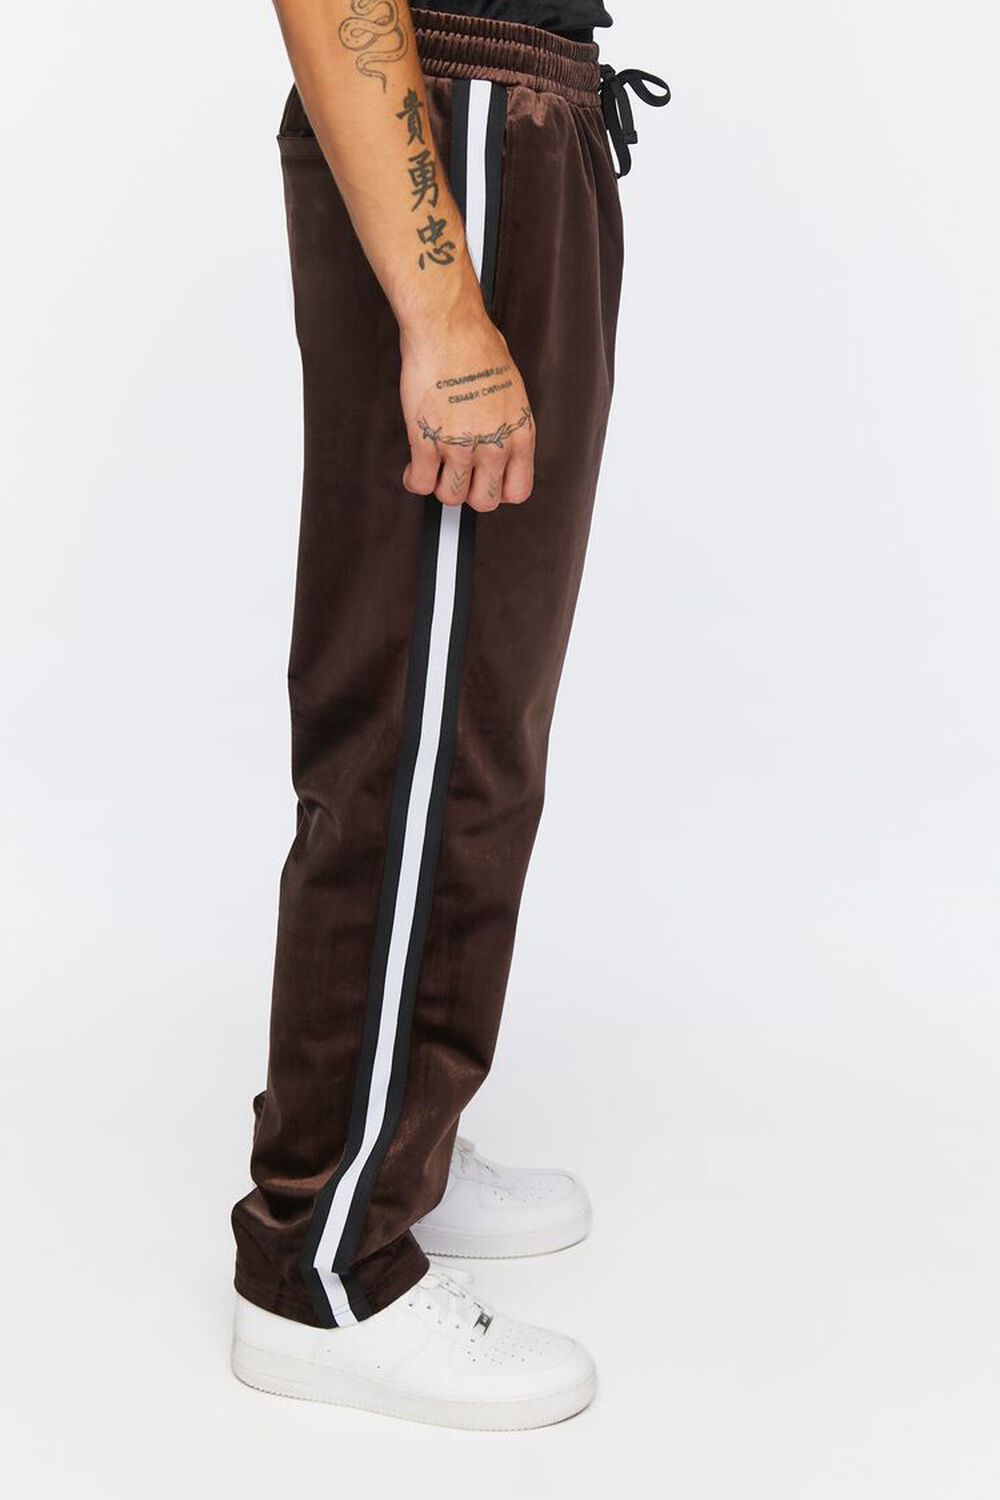 DARK BROWN/BLACK Velour Drawstring Slim-Fit Pants, image 3